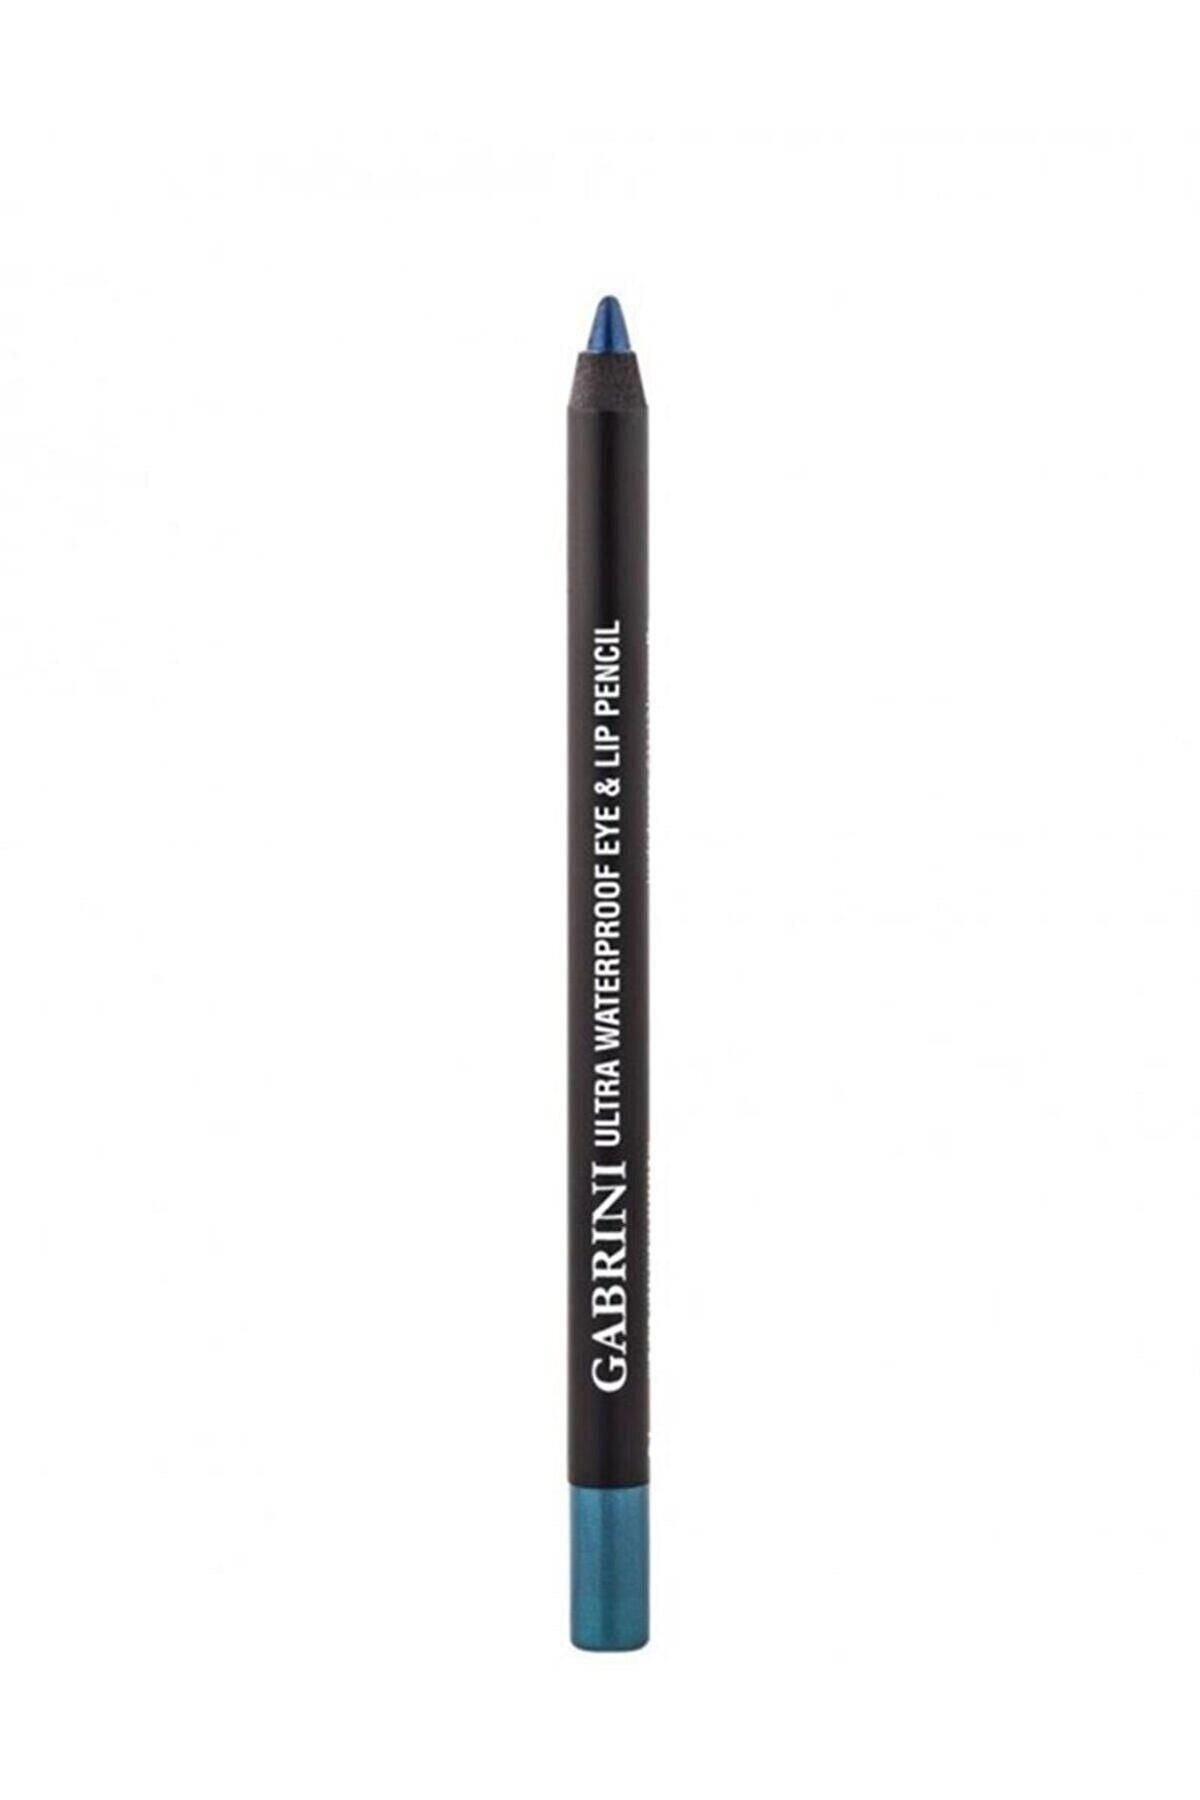 Gabrini Ultra Waterproof Eye & Lip Pencil 22